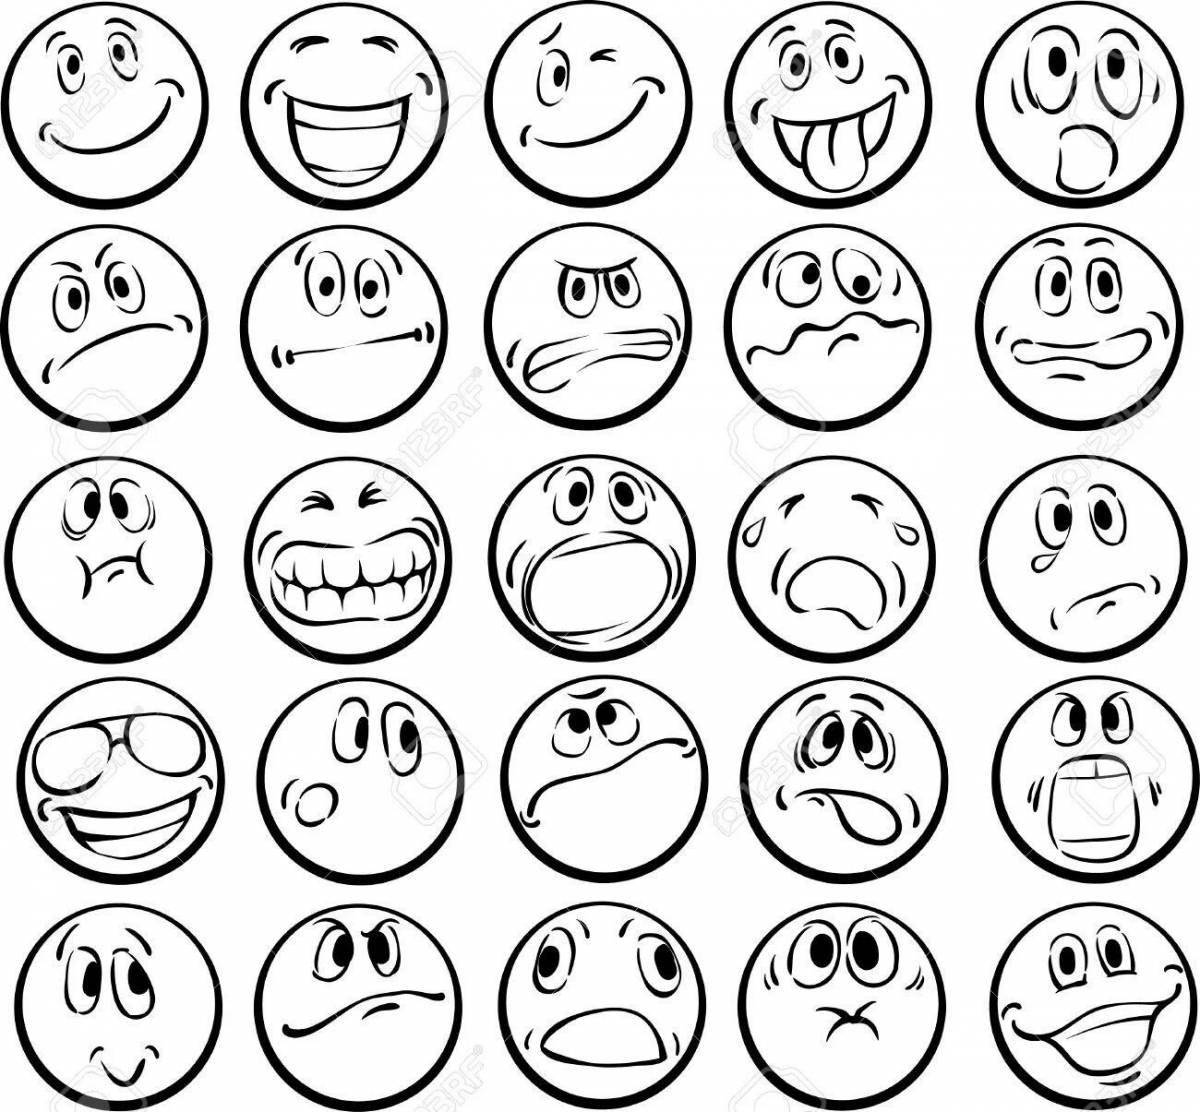 Sassy emoji coloring page